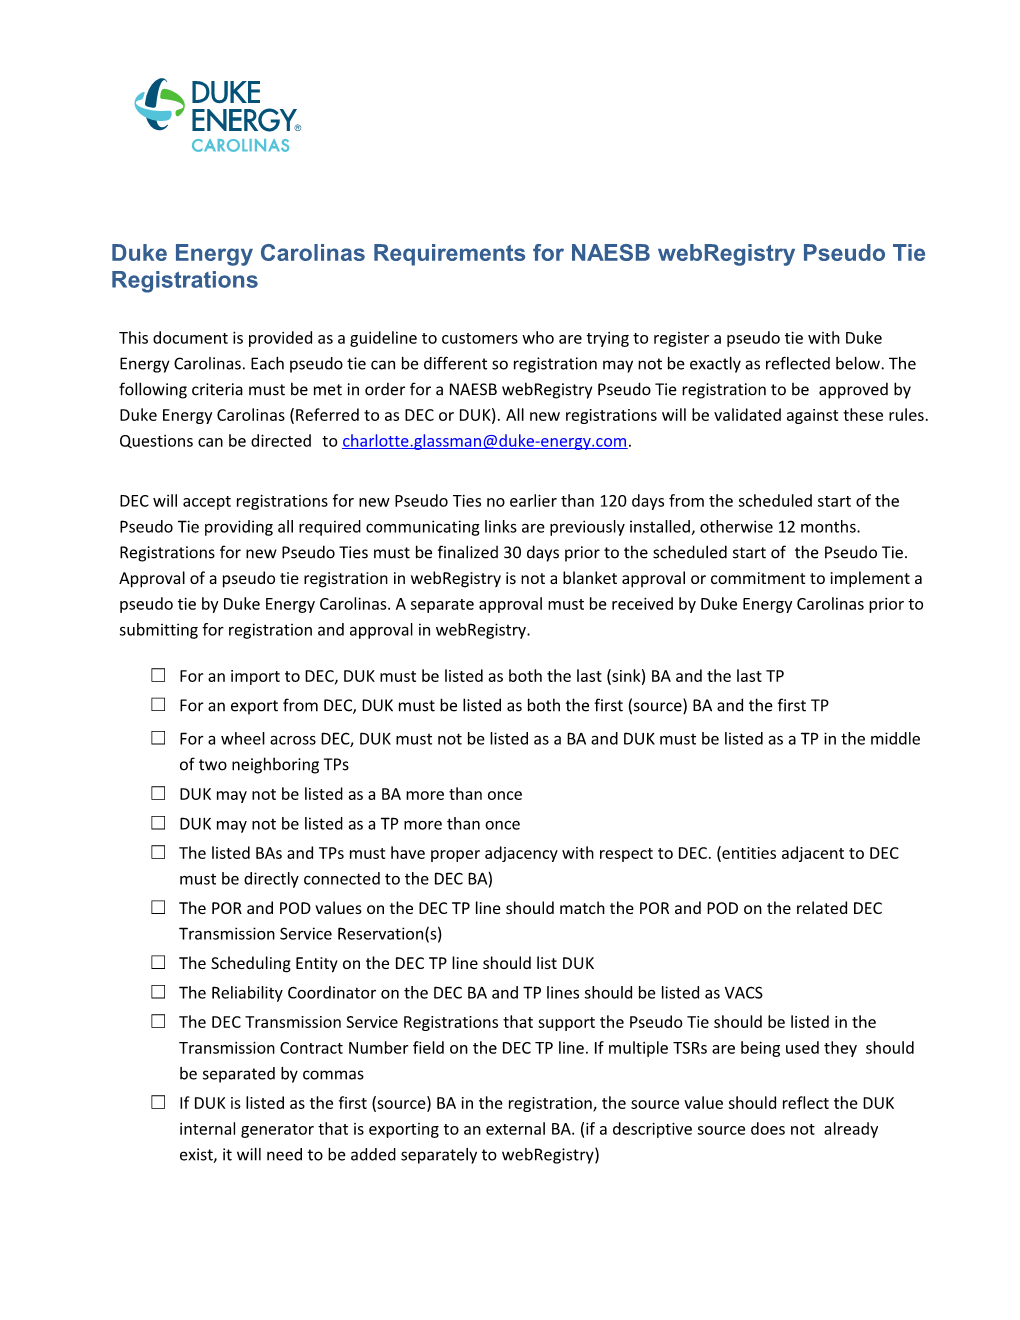 Duke Energy Carolinas Requirements for NAESB Webregistry Pseudo Tie Registrations